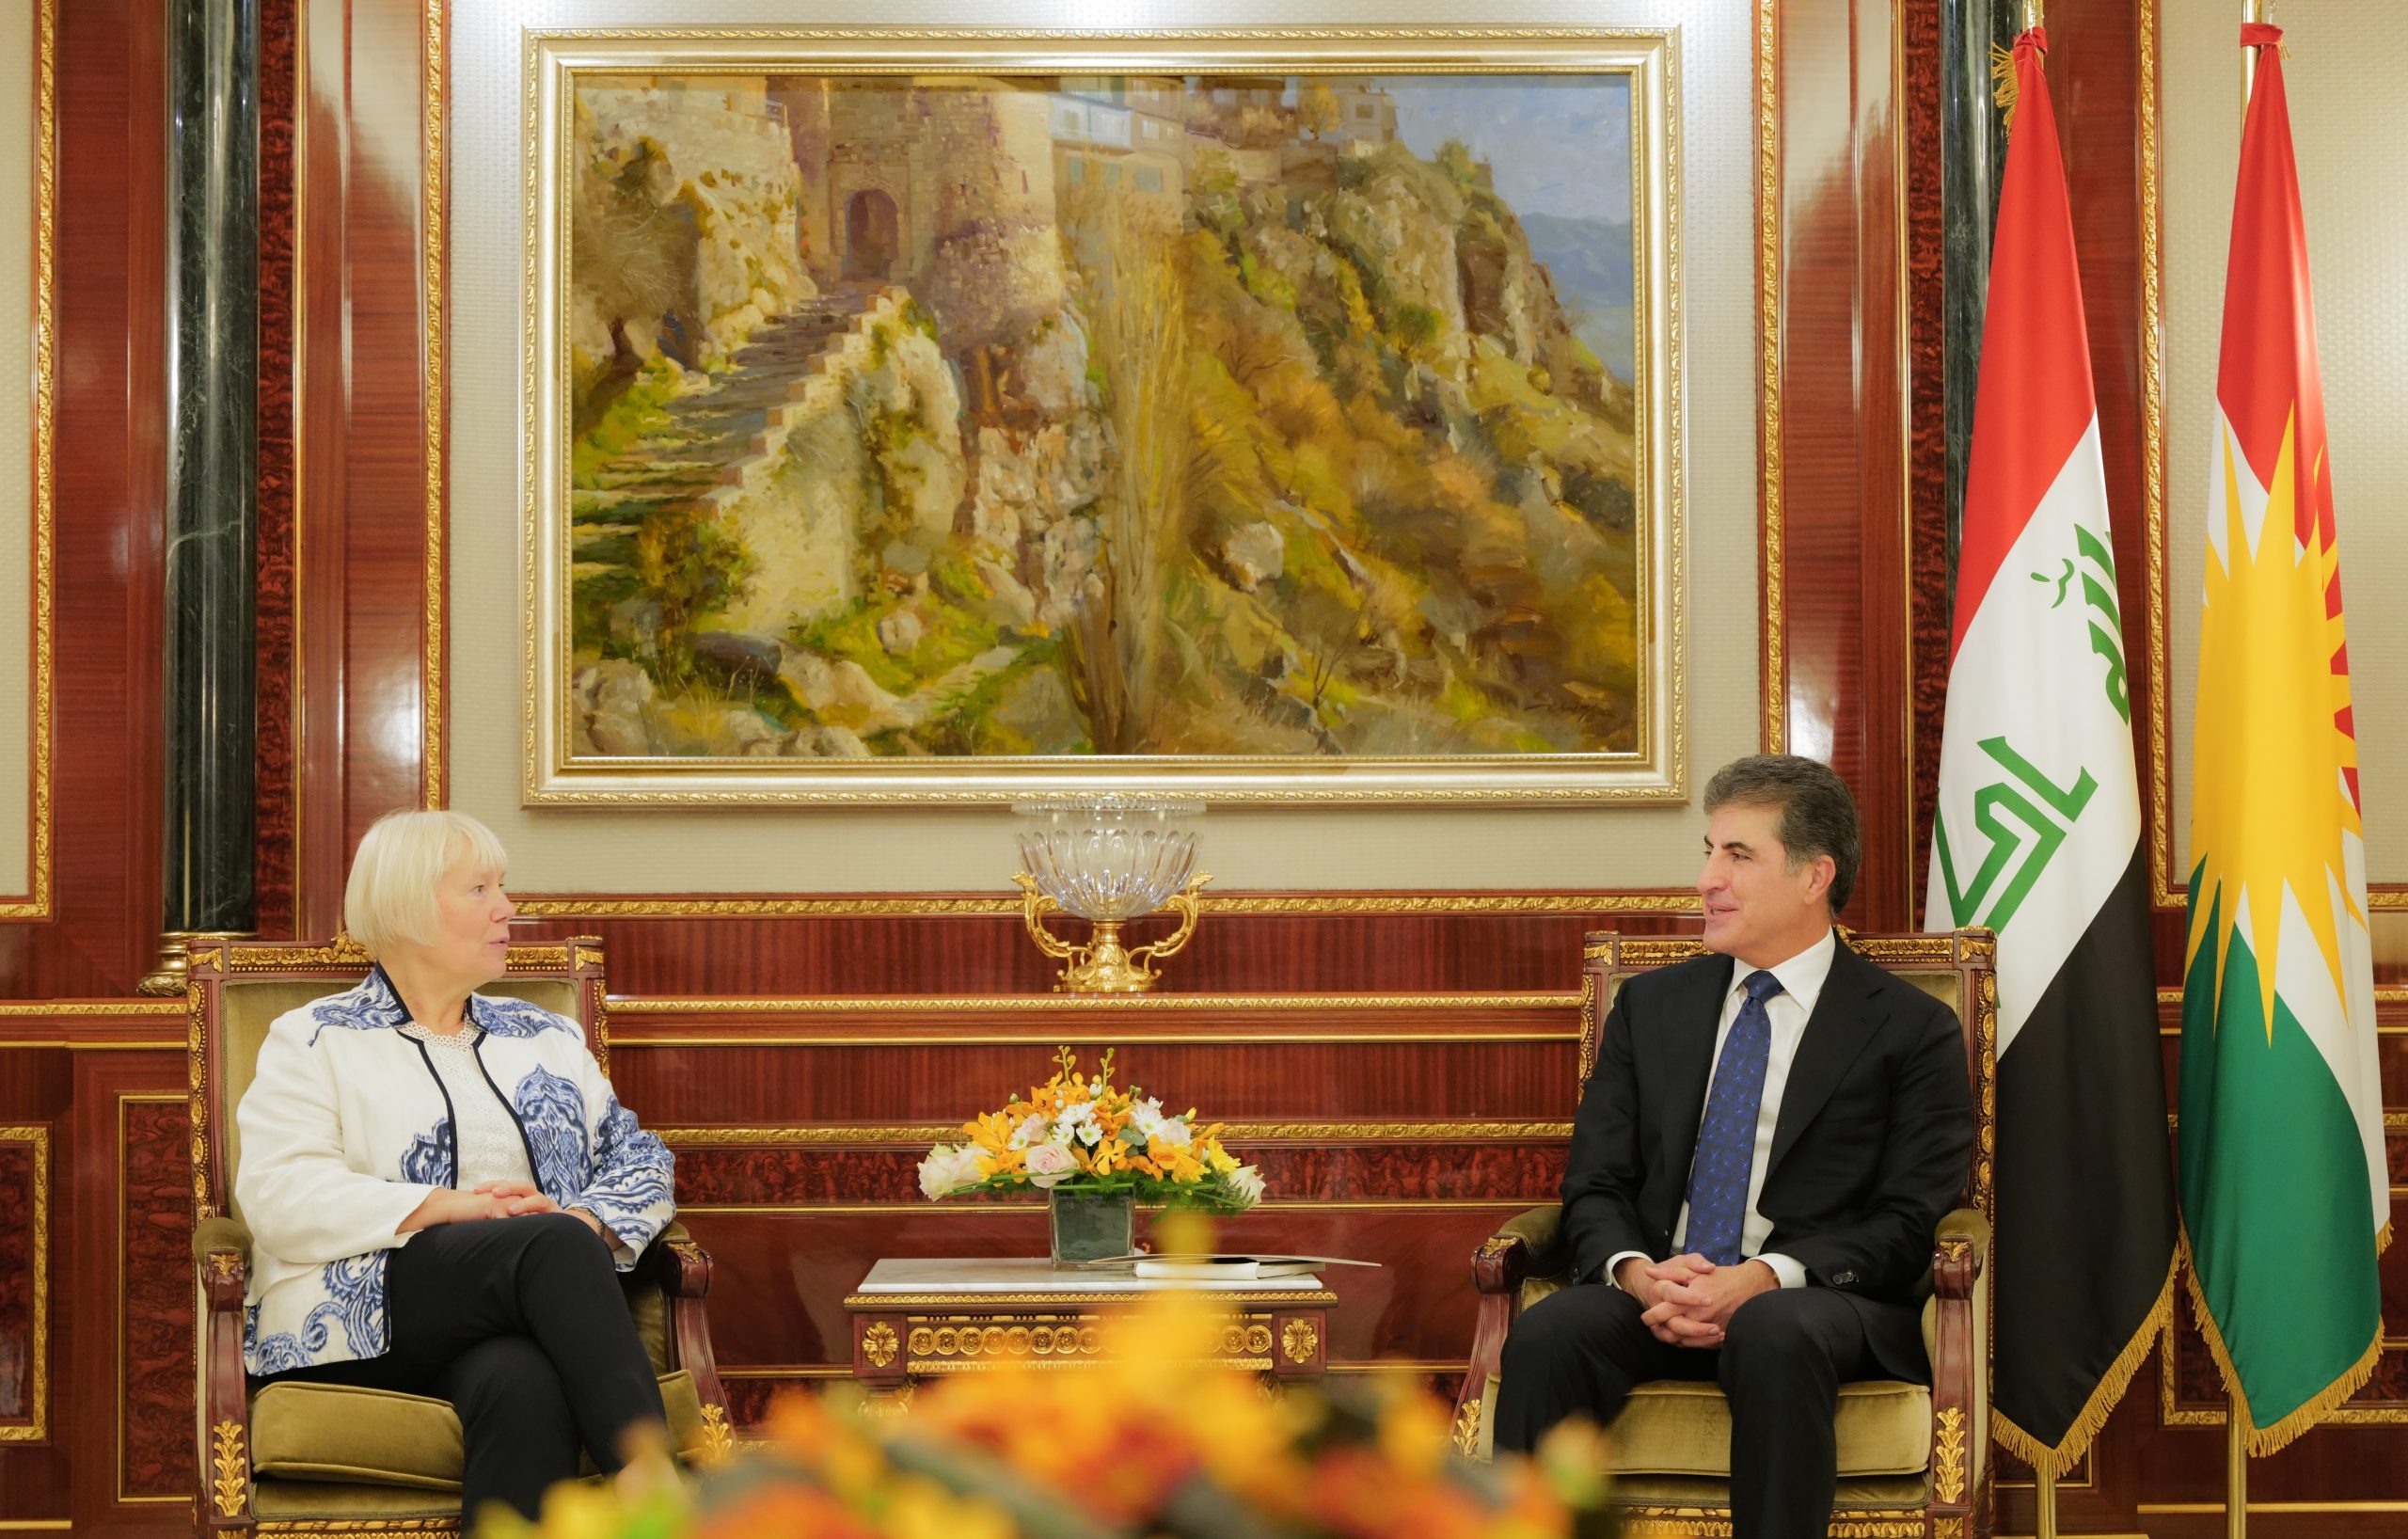 President Nechirvan Barzani meets with new German Ambassador to Iraq Ms. Christianne Hohmann